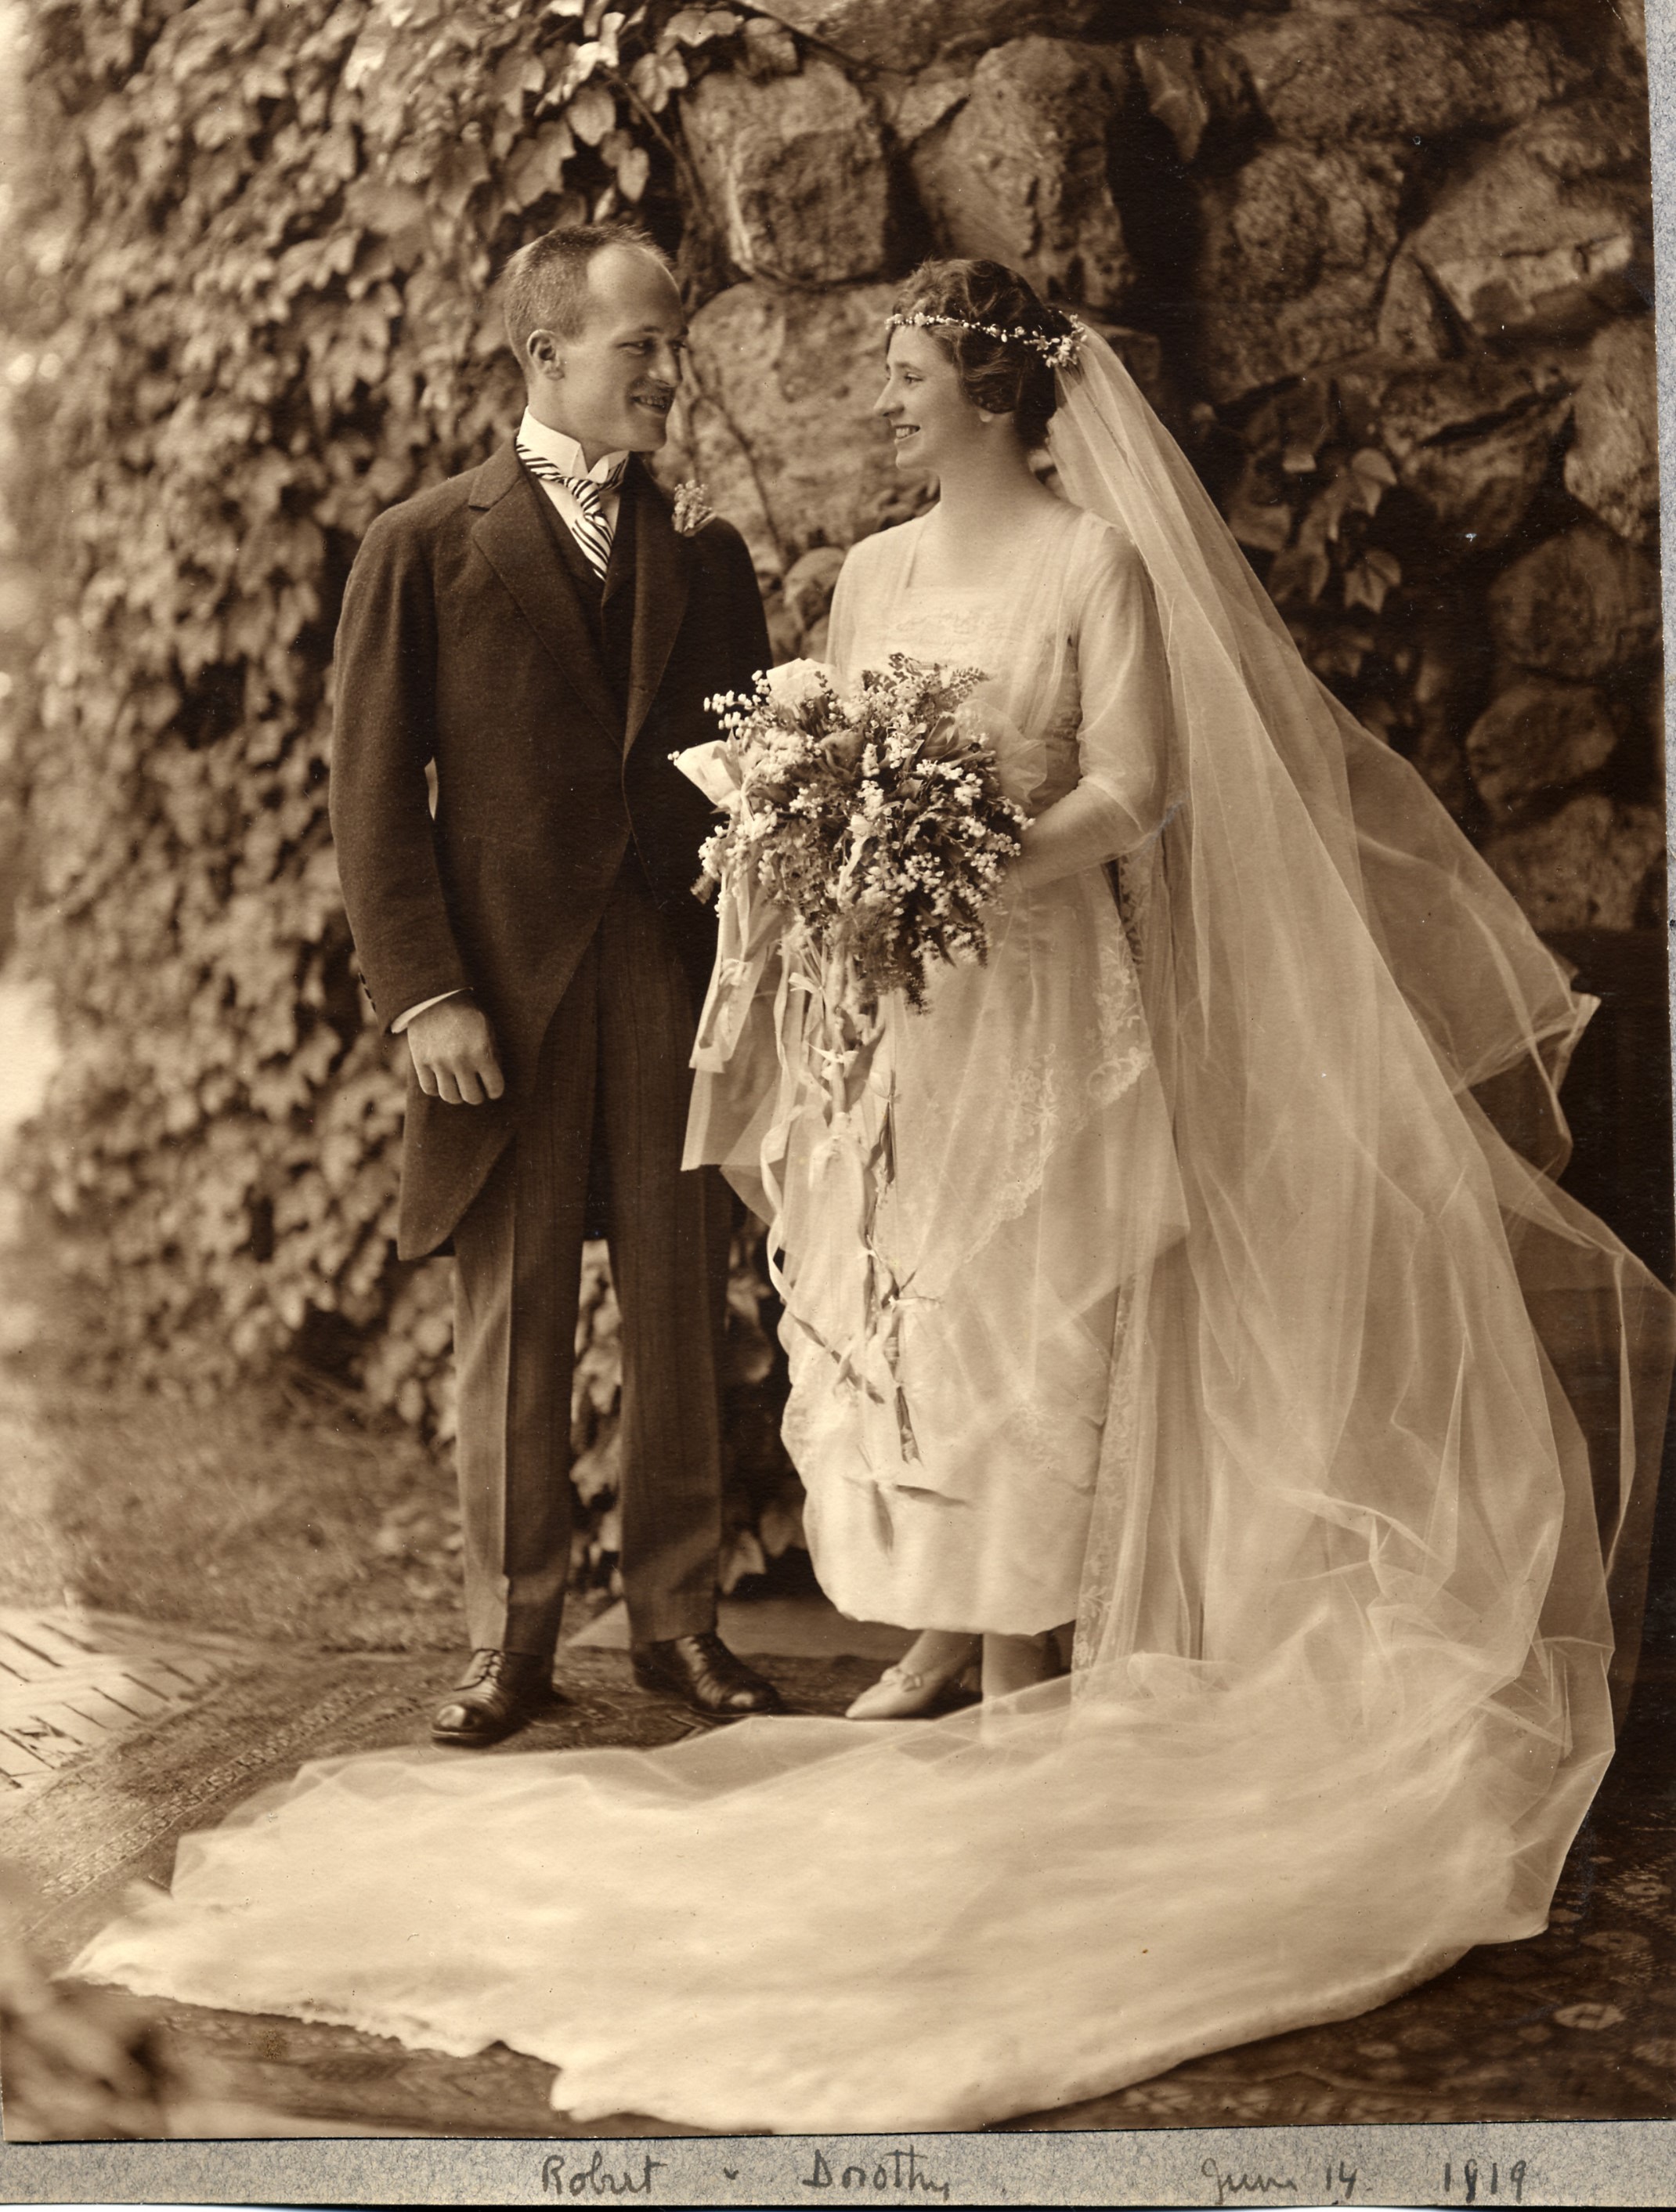 Storer/Paine Wedding, June 14, 1919 